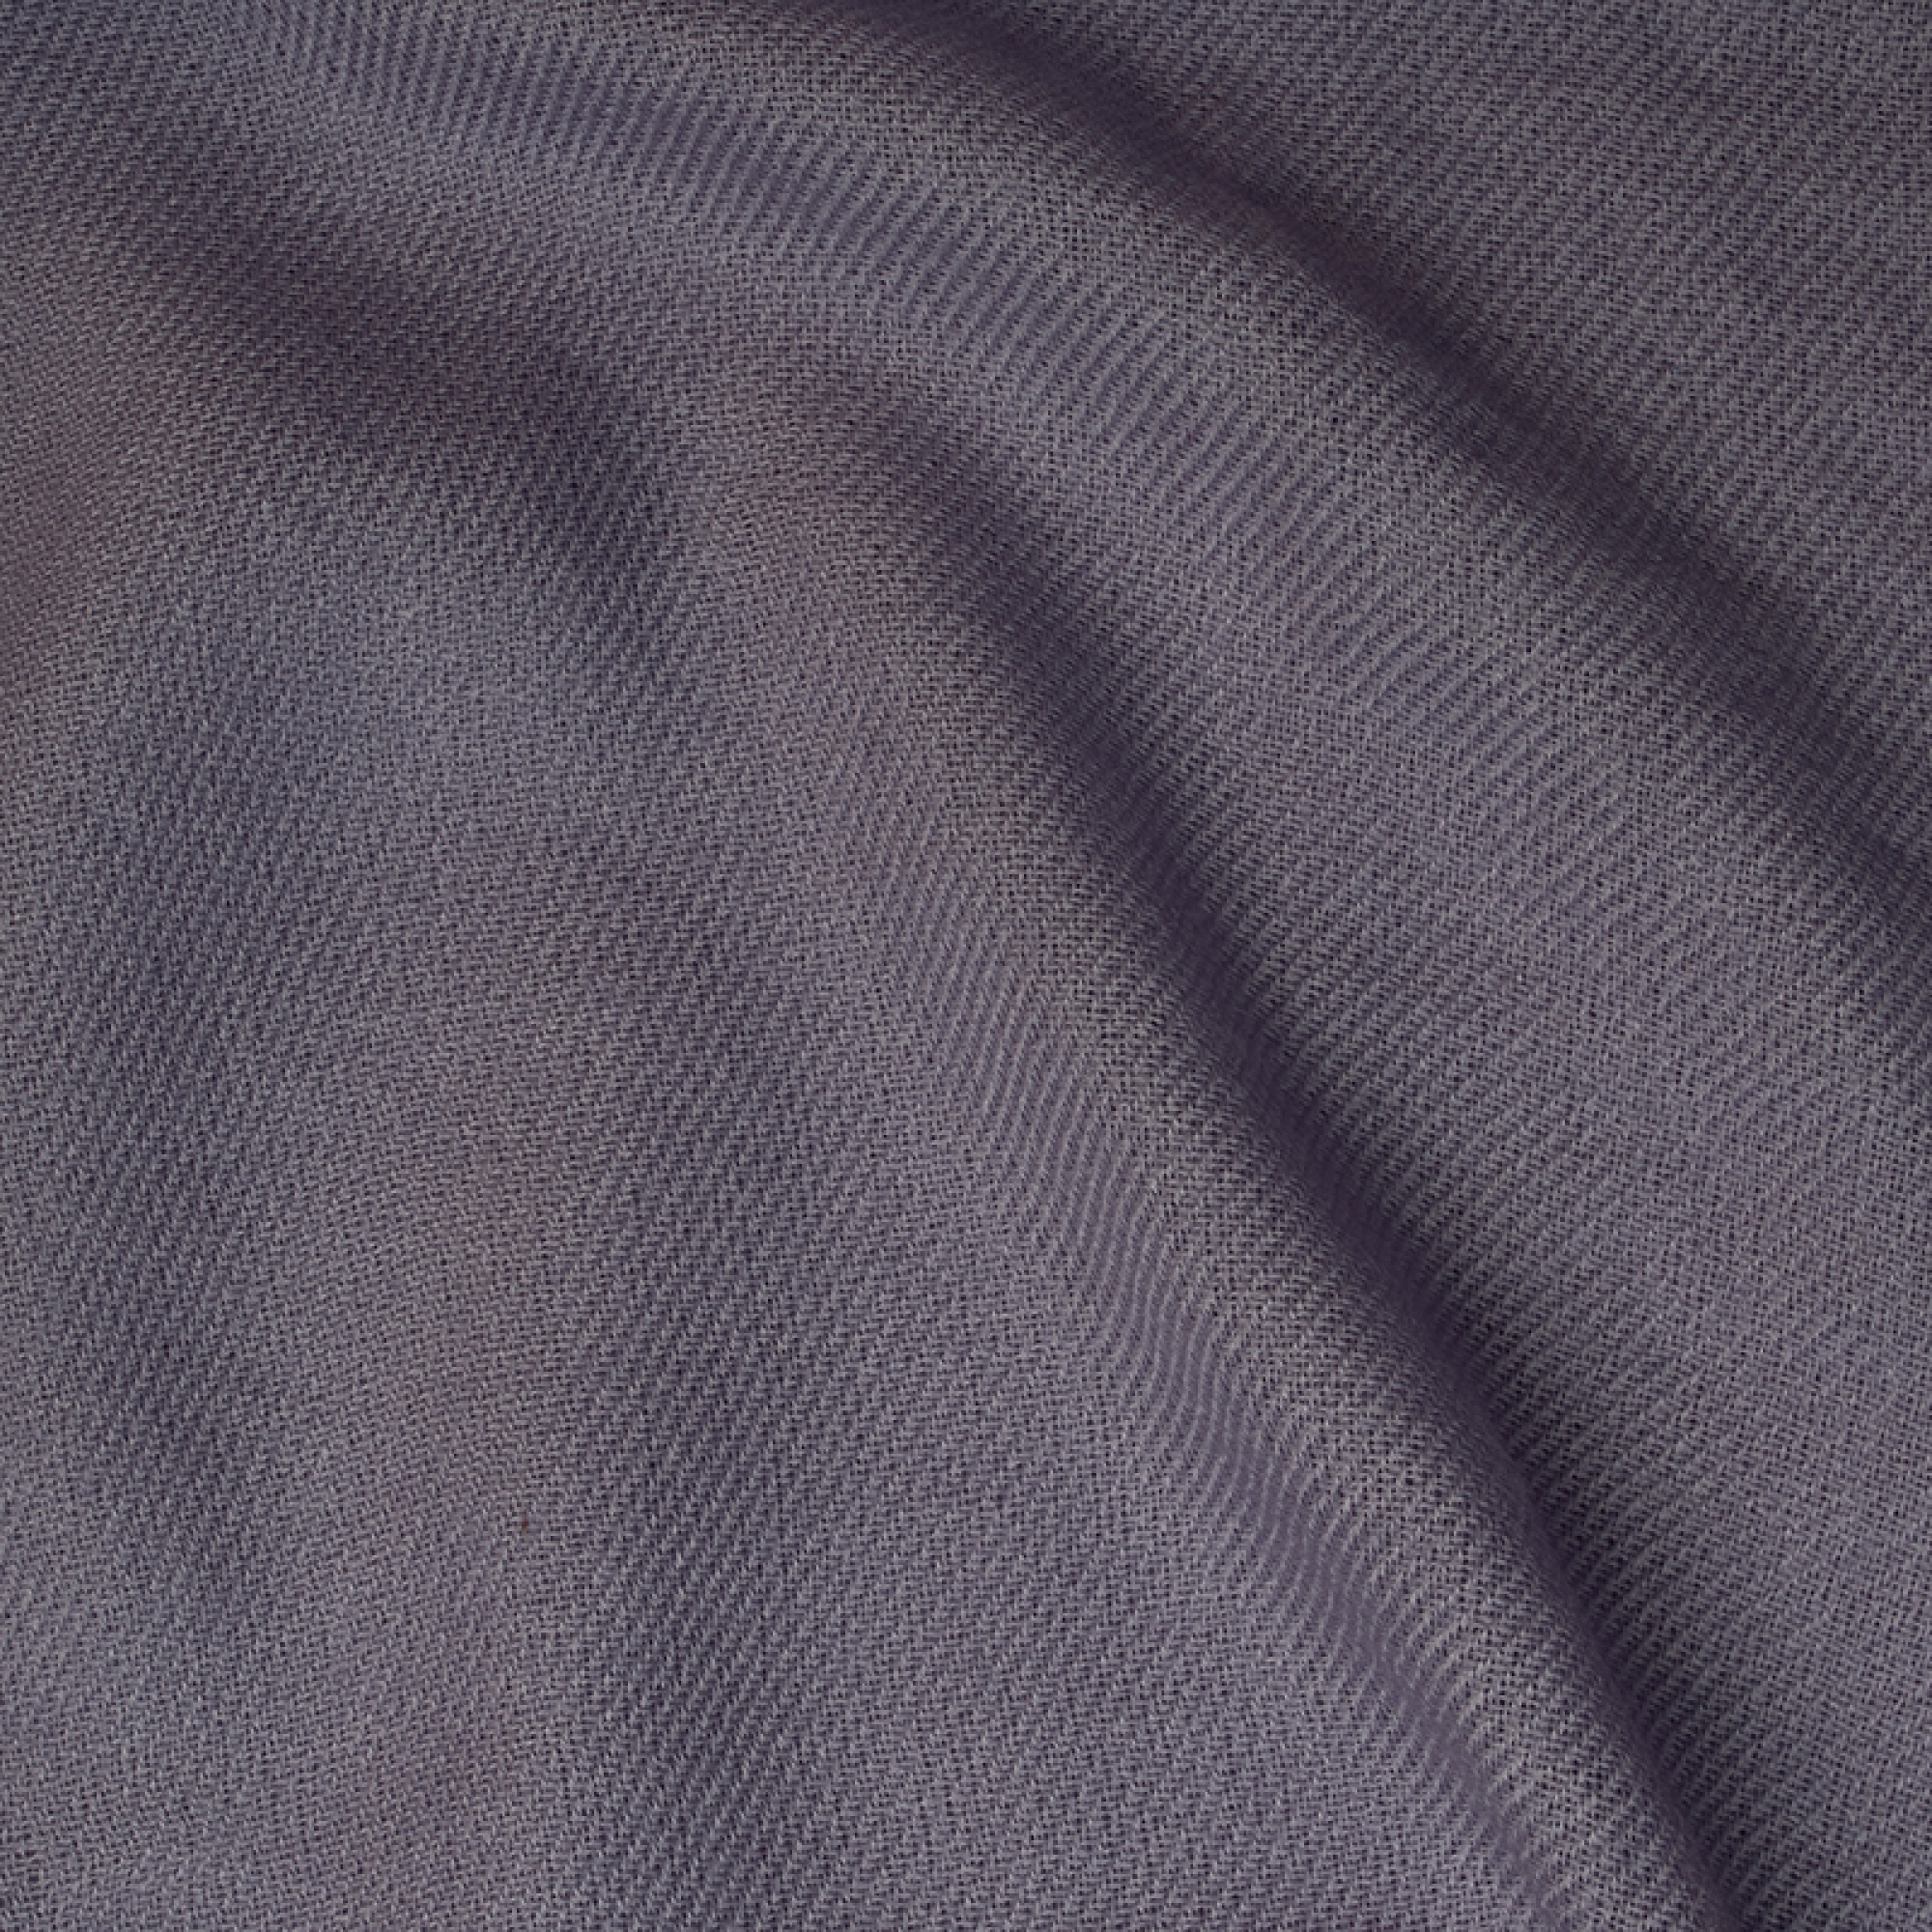 Cashmere accessories blanket toodoo plain m 180 x 220 heirloom lilac 180 x 220 cm